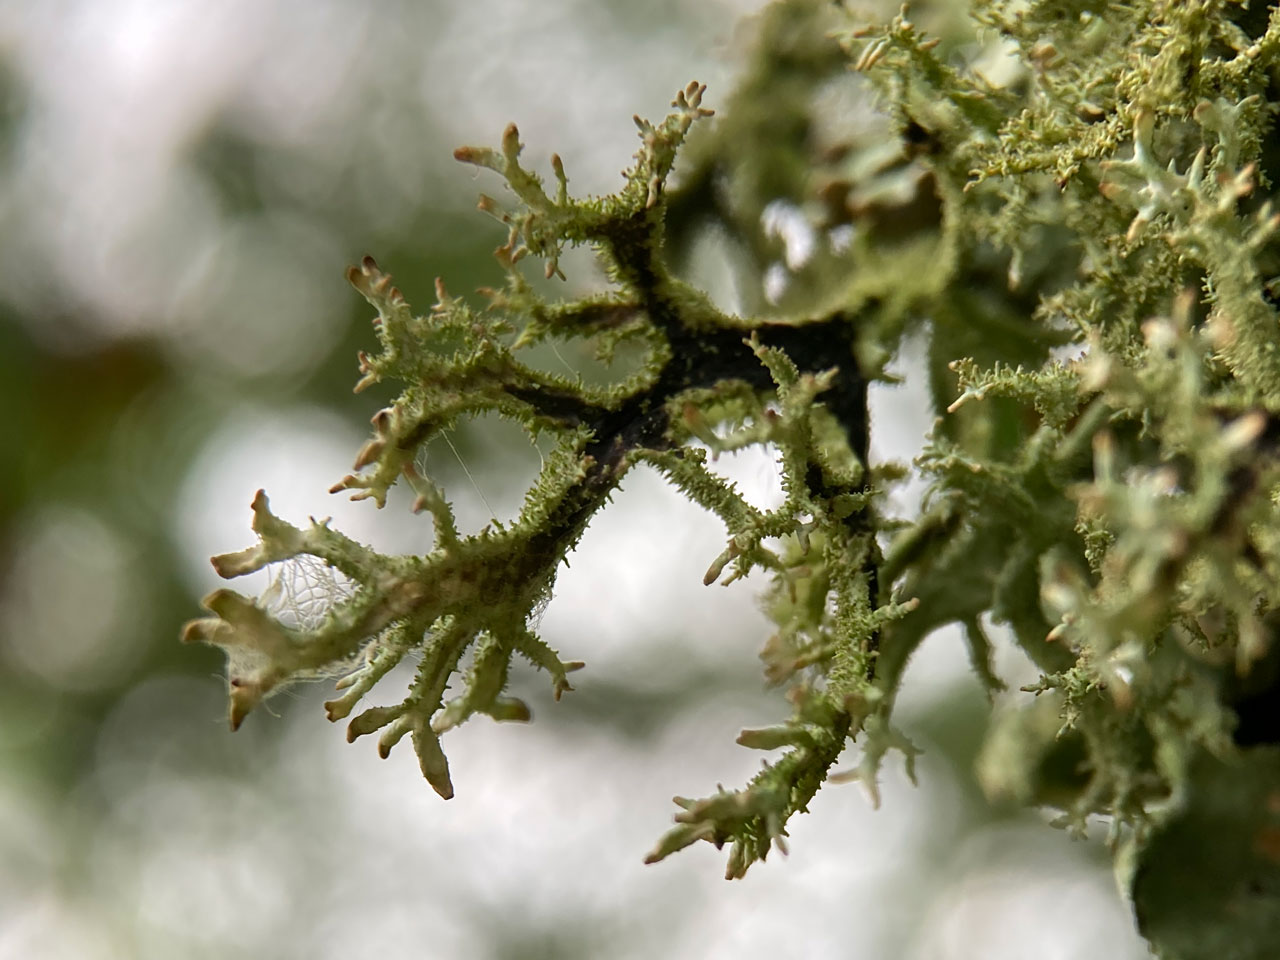 Pseudevernia furfuracea var. ceratea, Birch twig, Busketts Wood, New Forest